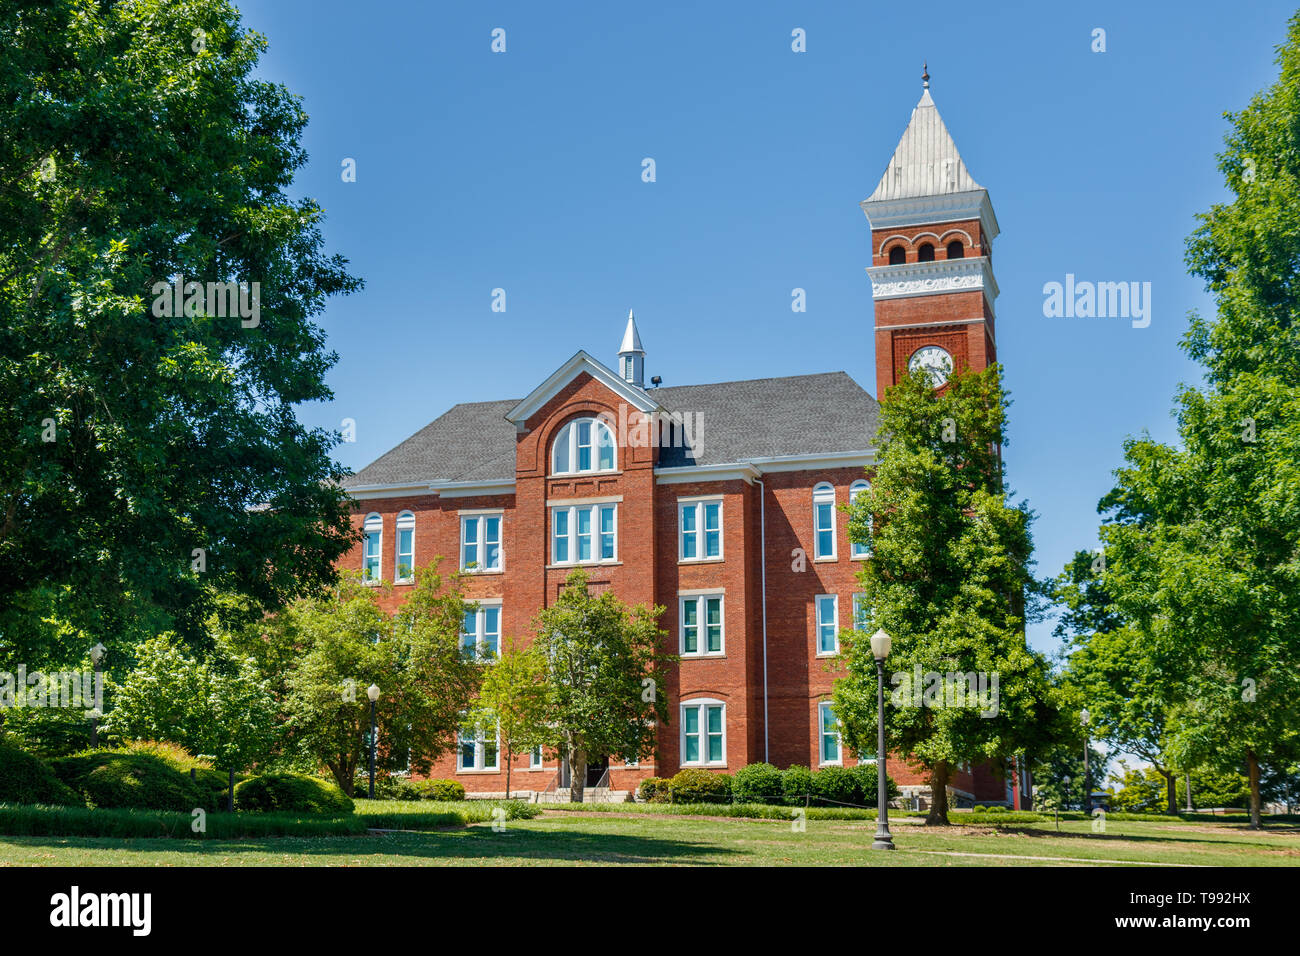 CLEMSON, SC, USA - 2 de mayo: Tillman Hall en la Universidad de Clemson en Mayo 2, 2019 en Clemson, Carolina del Sur. Foto de stock